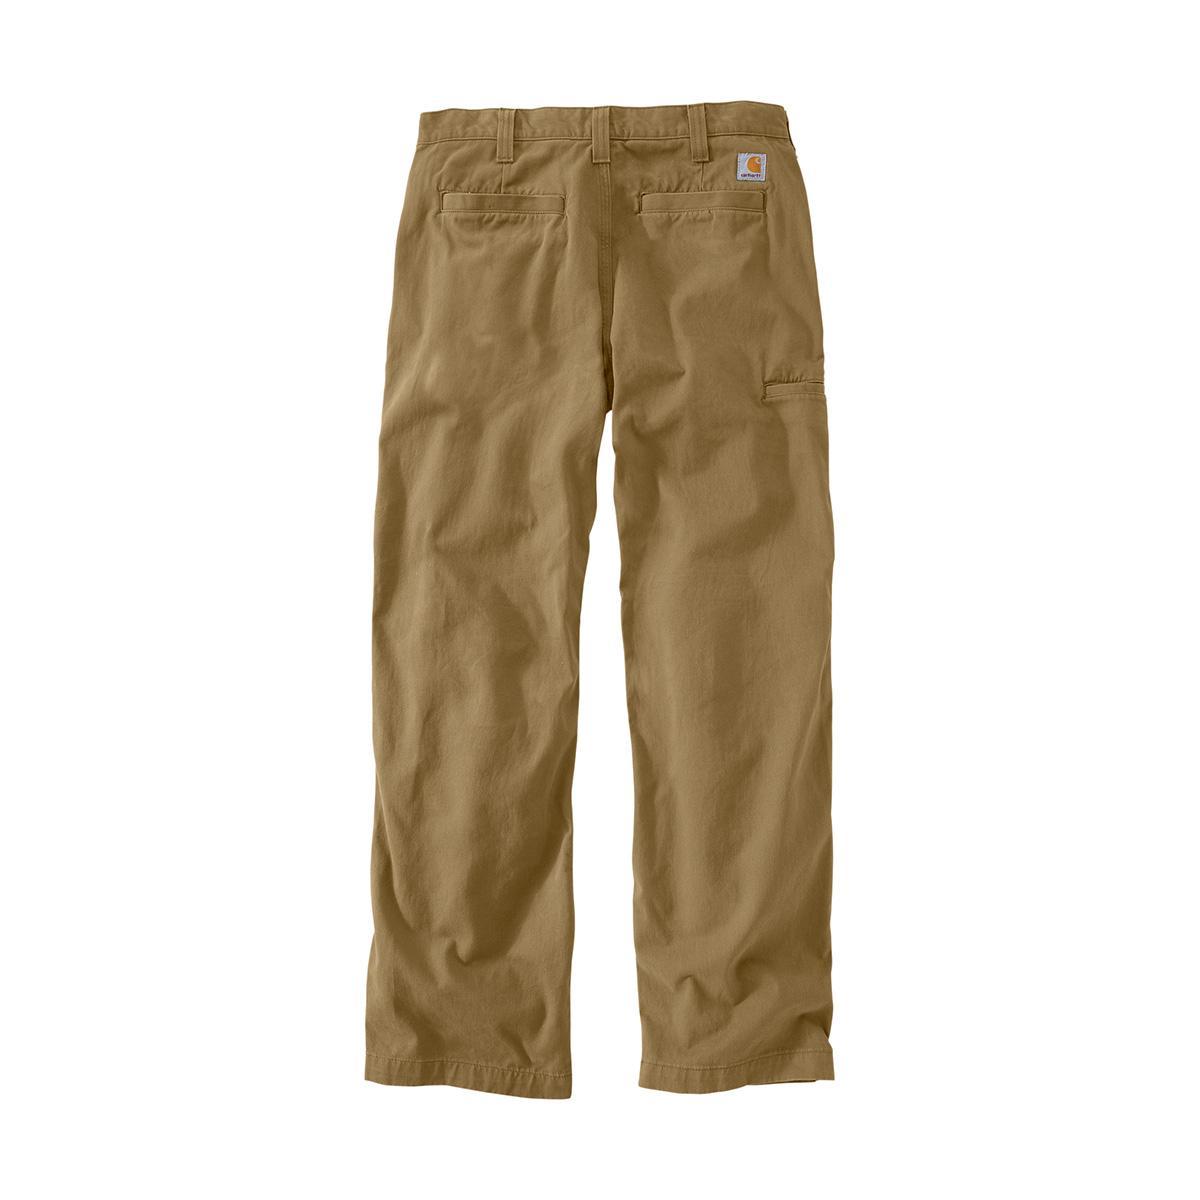 Carhartt Pants: Men's Field Khaki 100095 285 Relaxed Fit Rugged